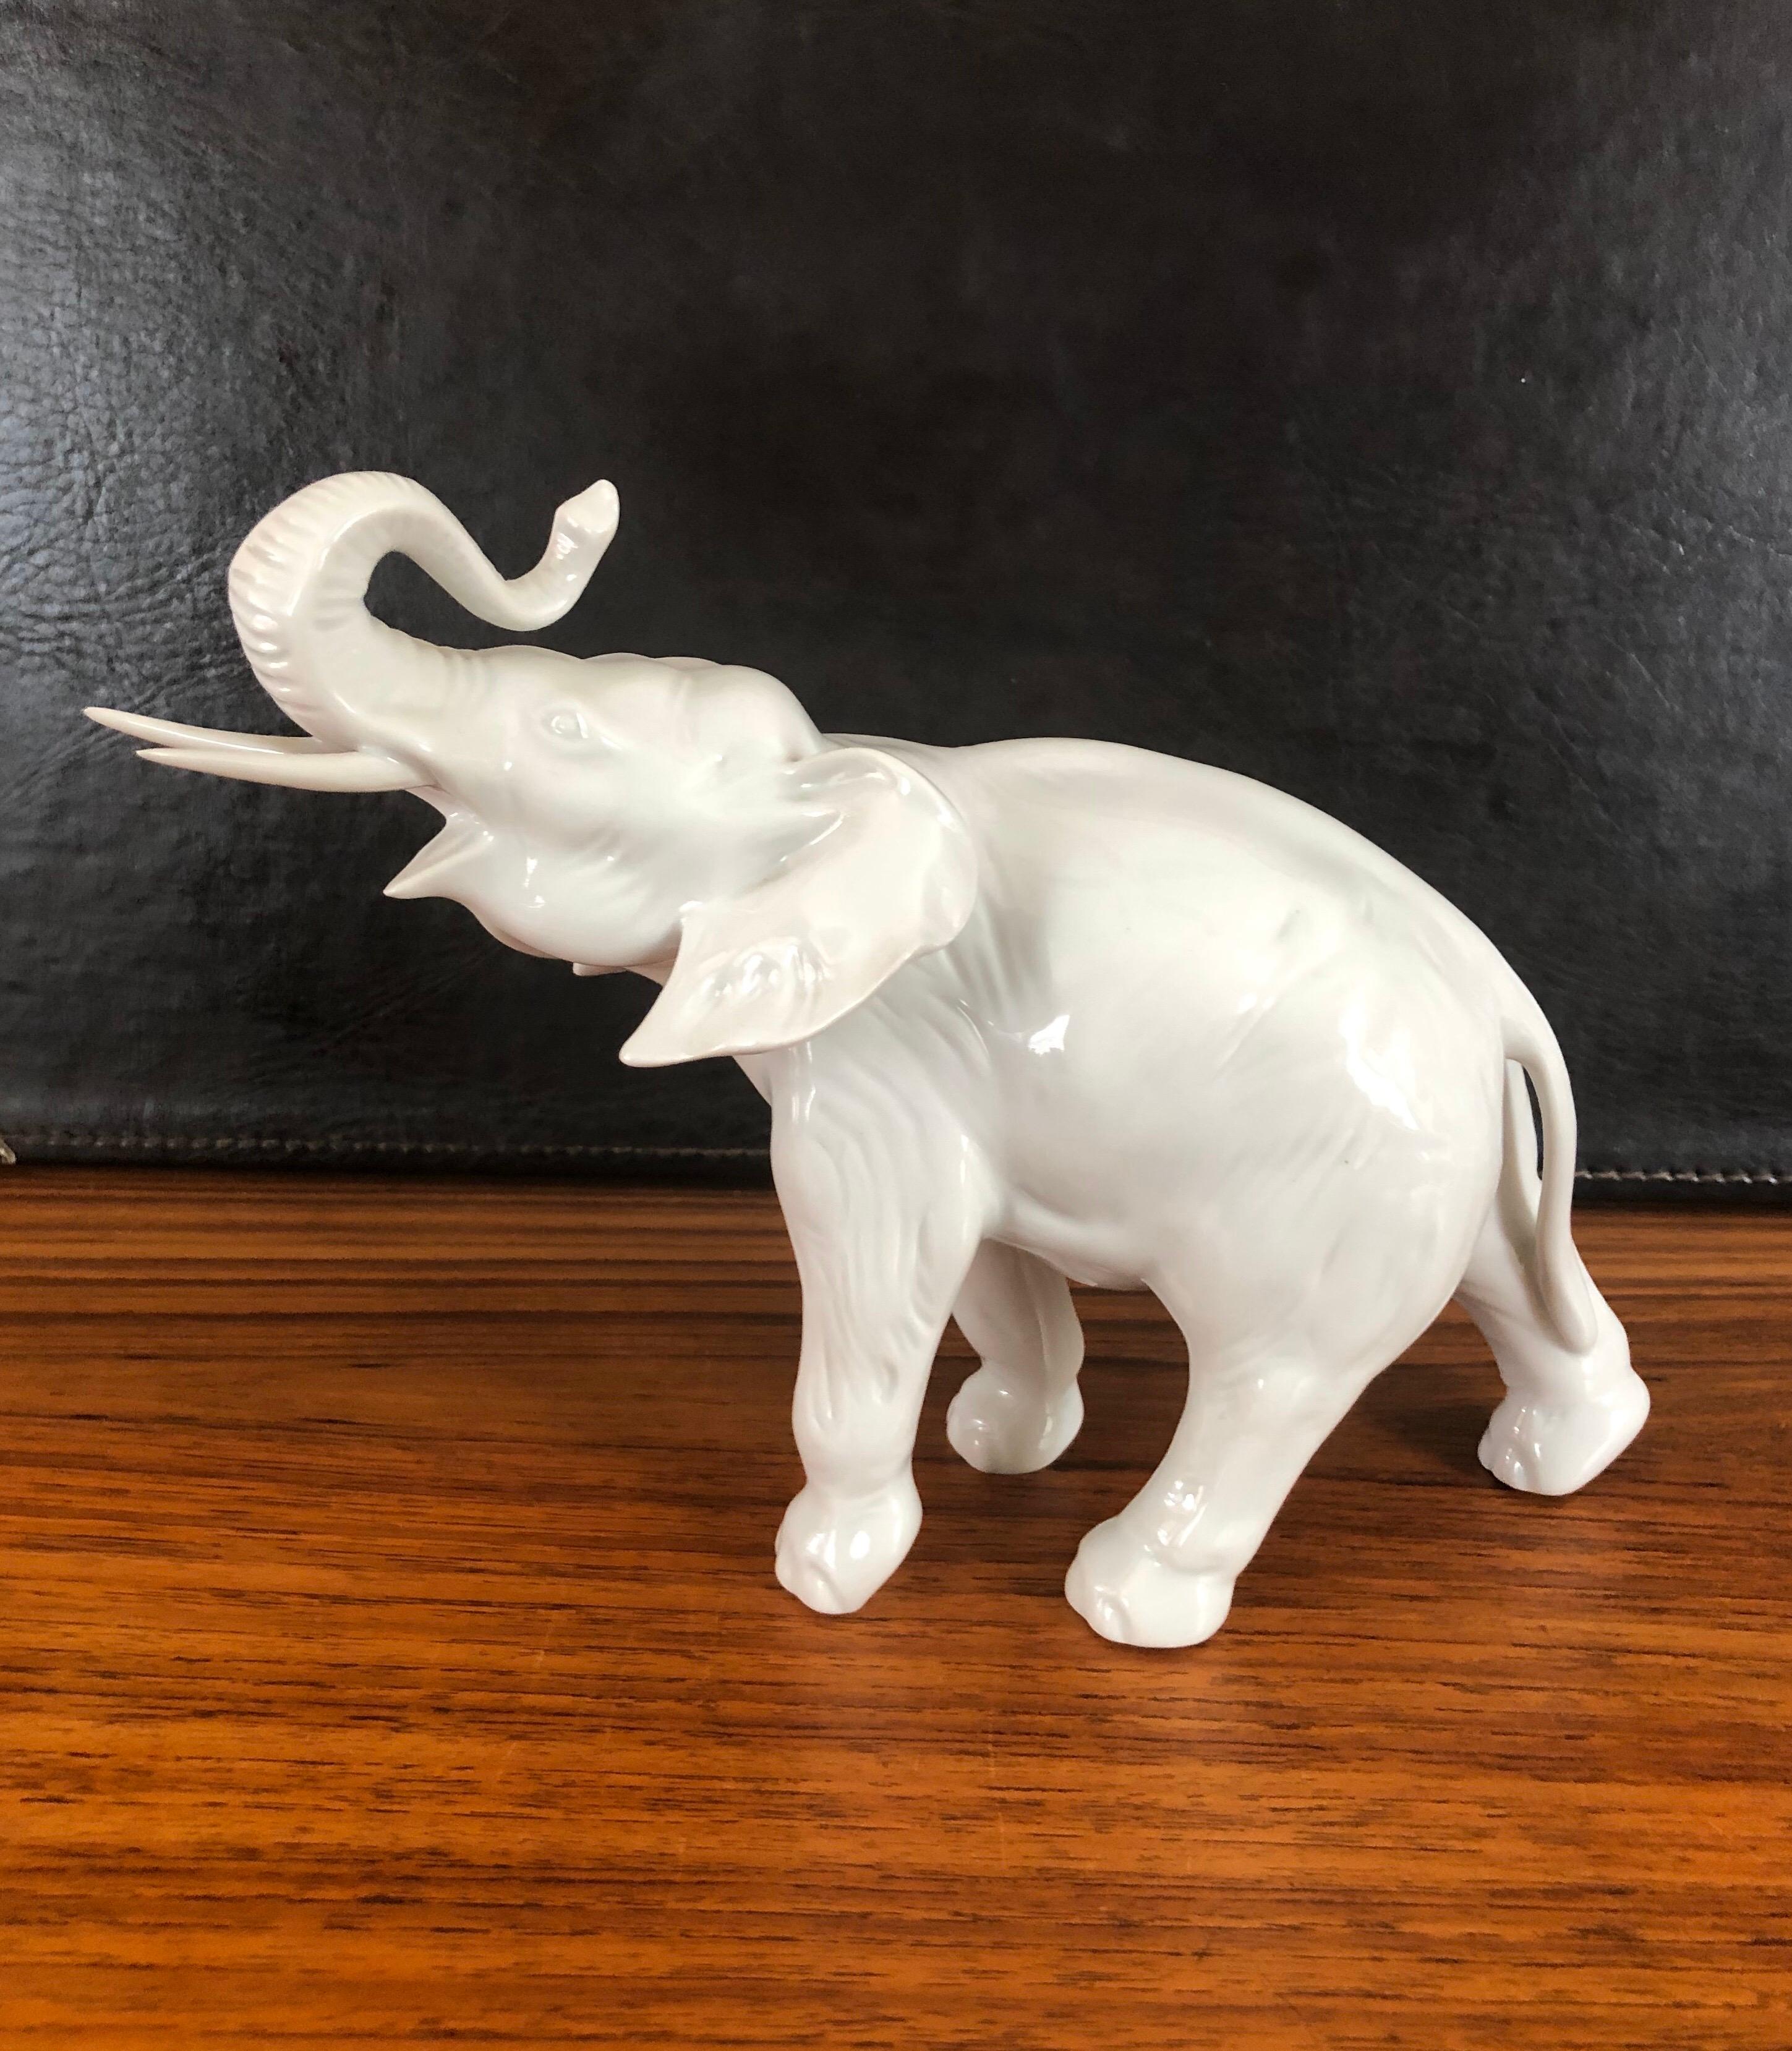 Pair of White Porcelain Elephant Sculptures by Royal Dux For Sale 3